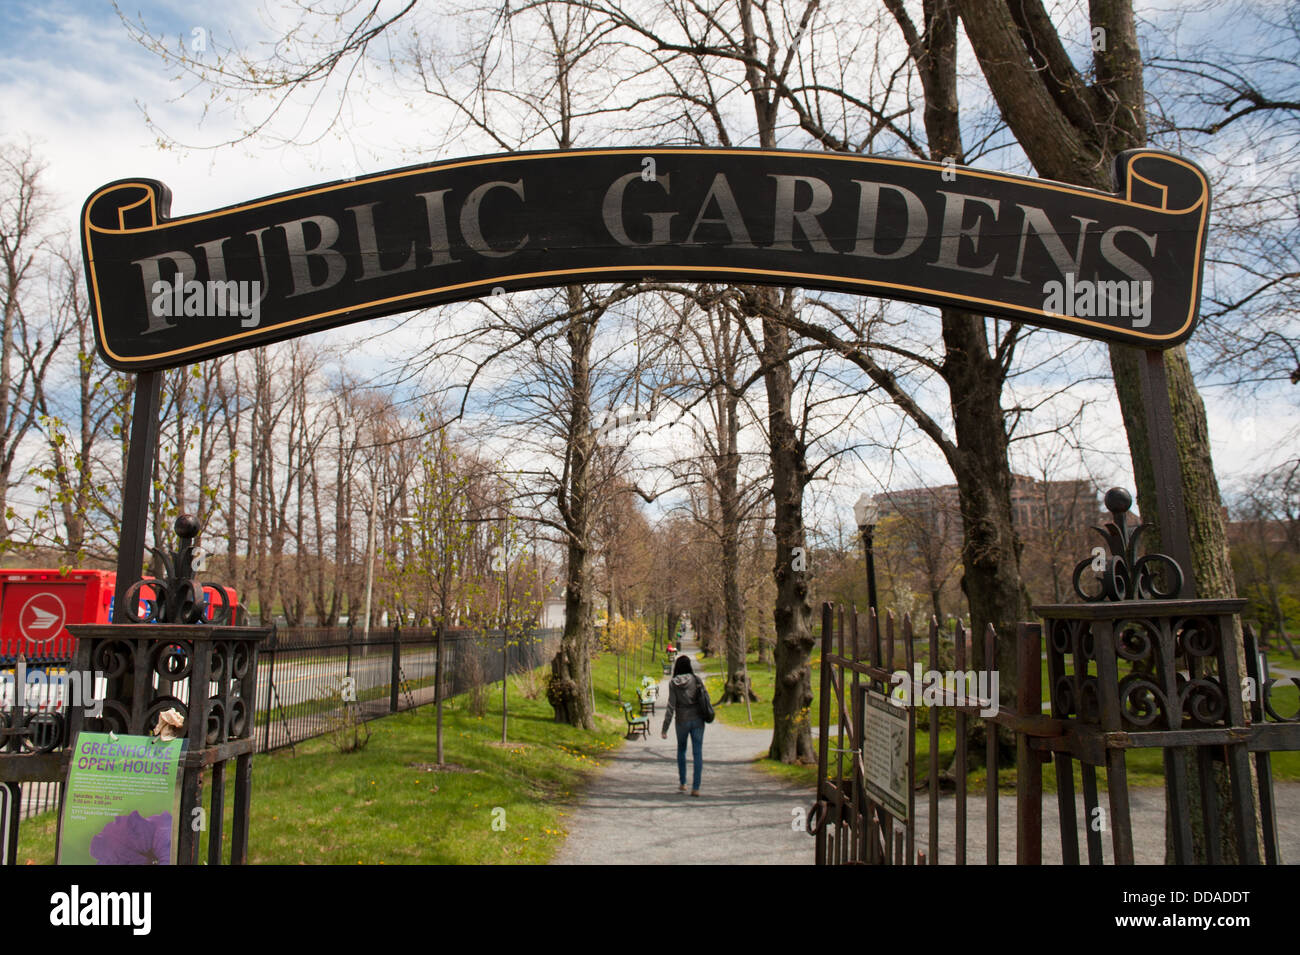 Public Gardens Entrance in Nova Scotia Canada Sign. Trees and fence line the enterance. Stock Photo